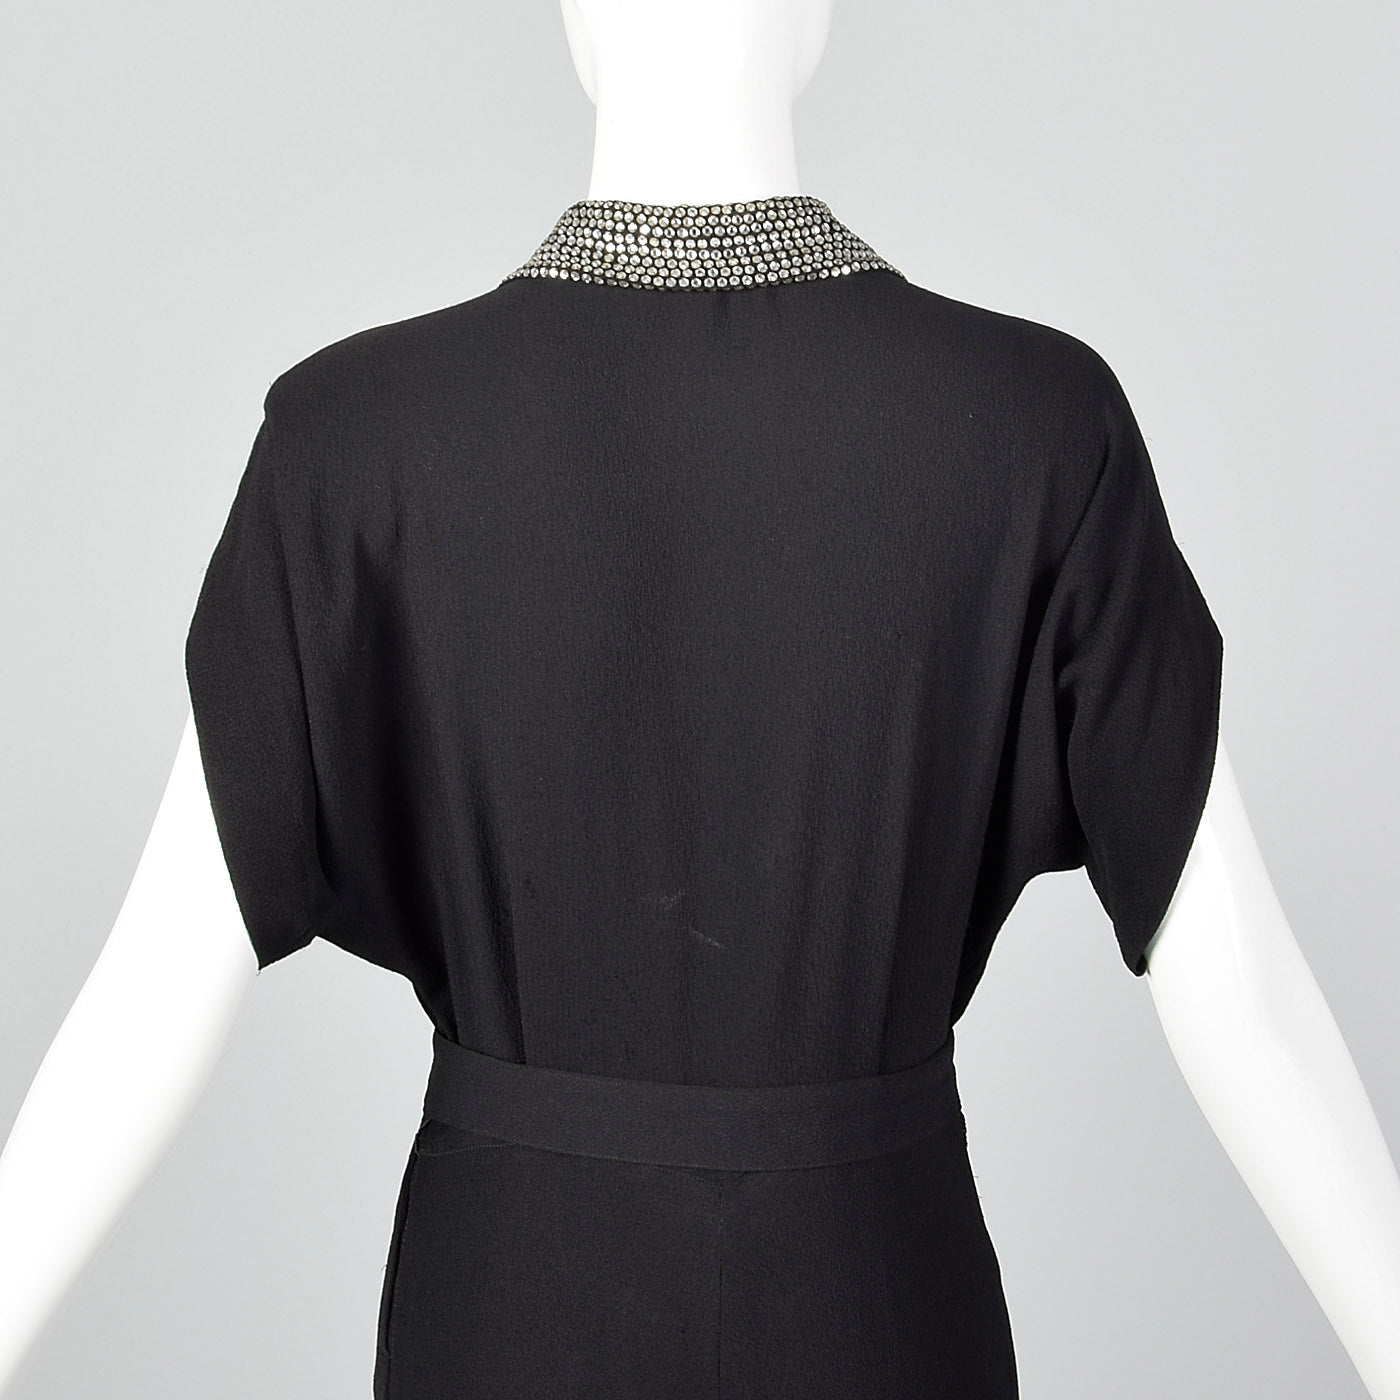 1940s Black Rayon Dress with Rhinestone Collar